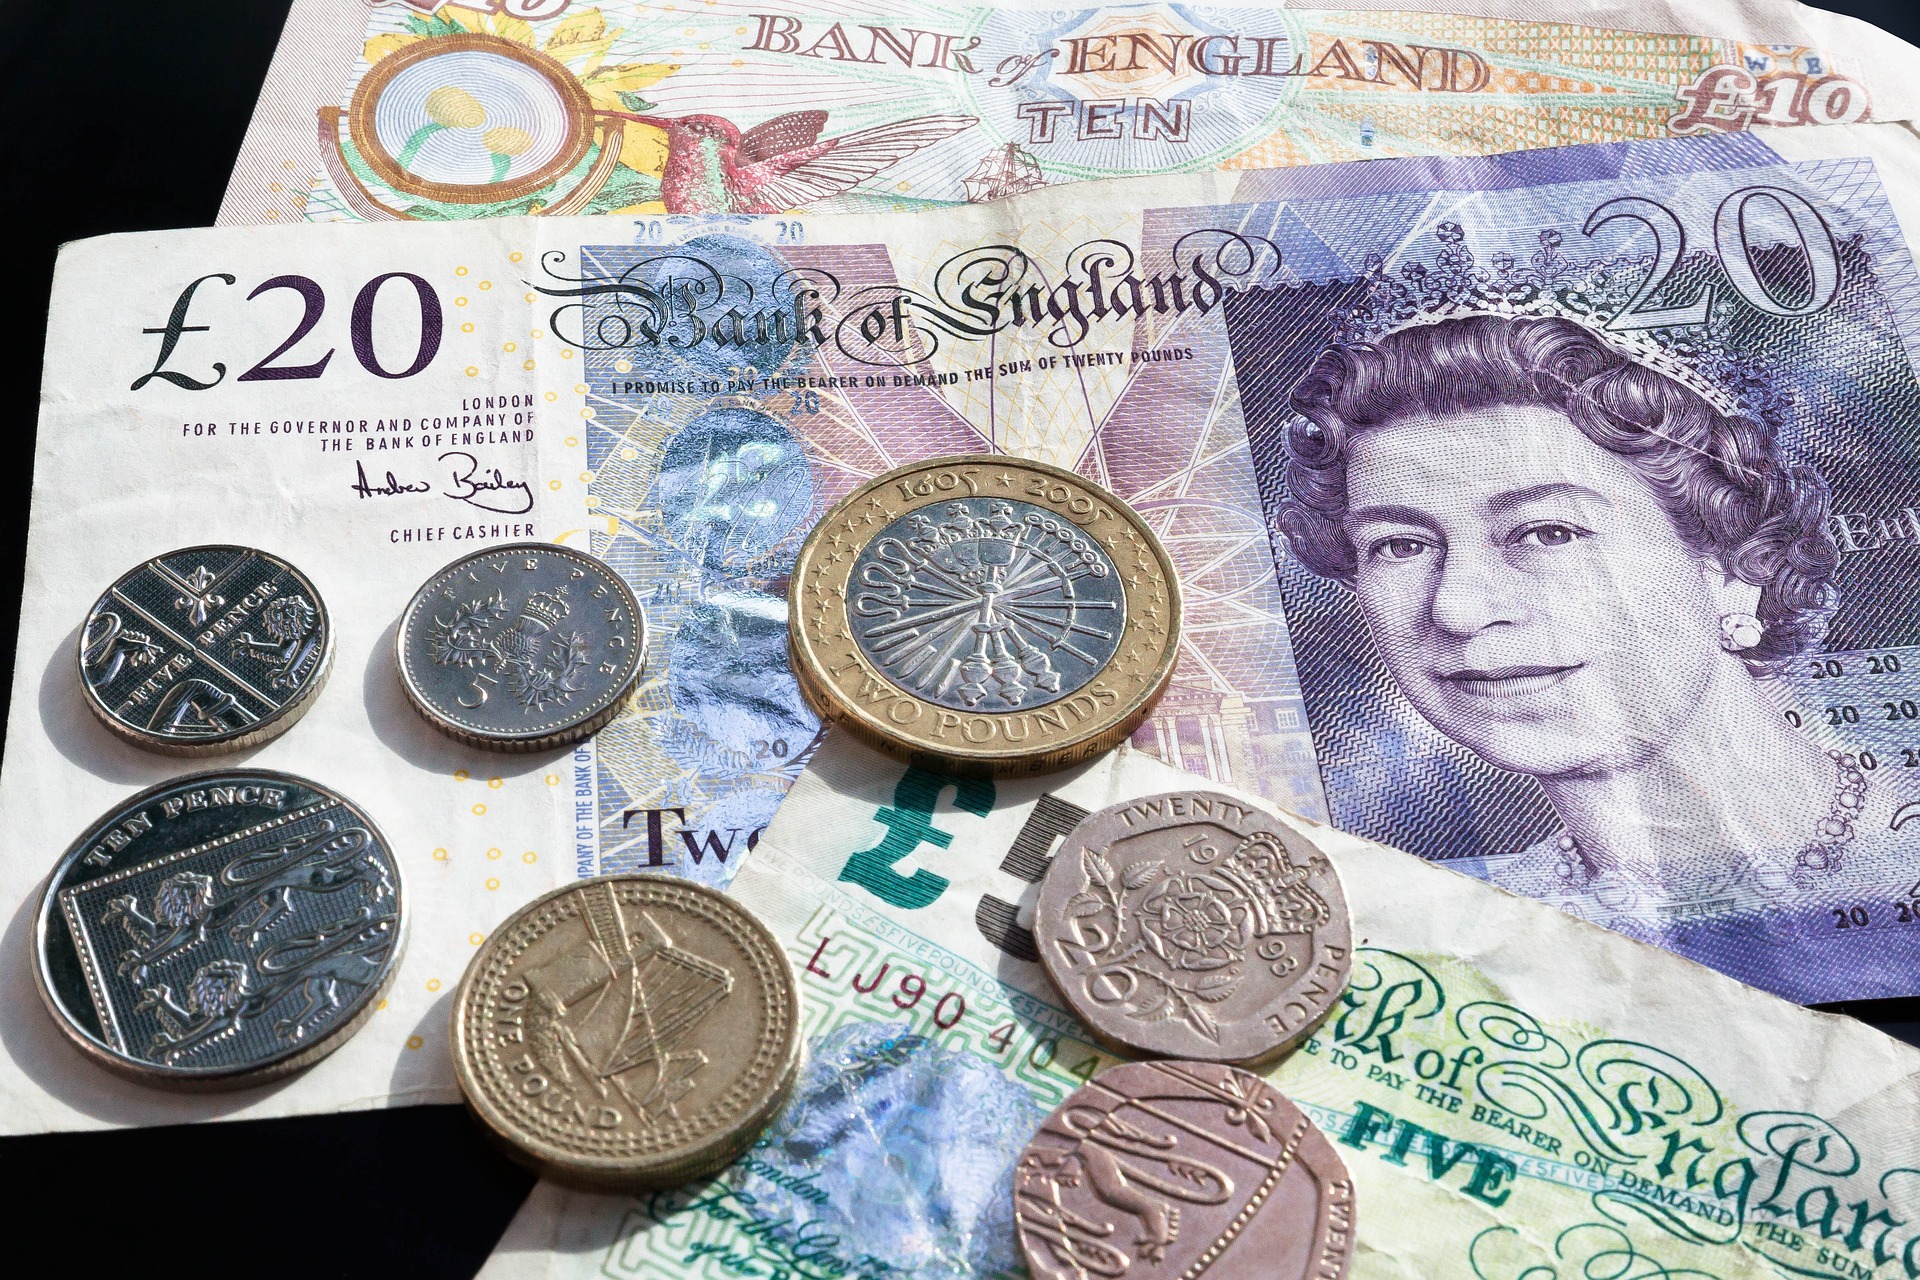 British bank notes and coins